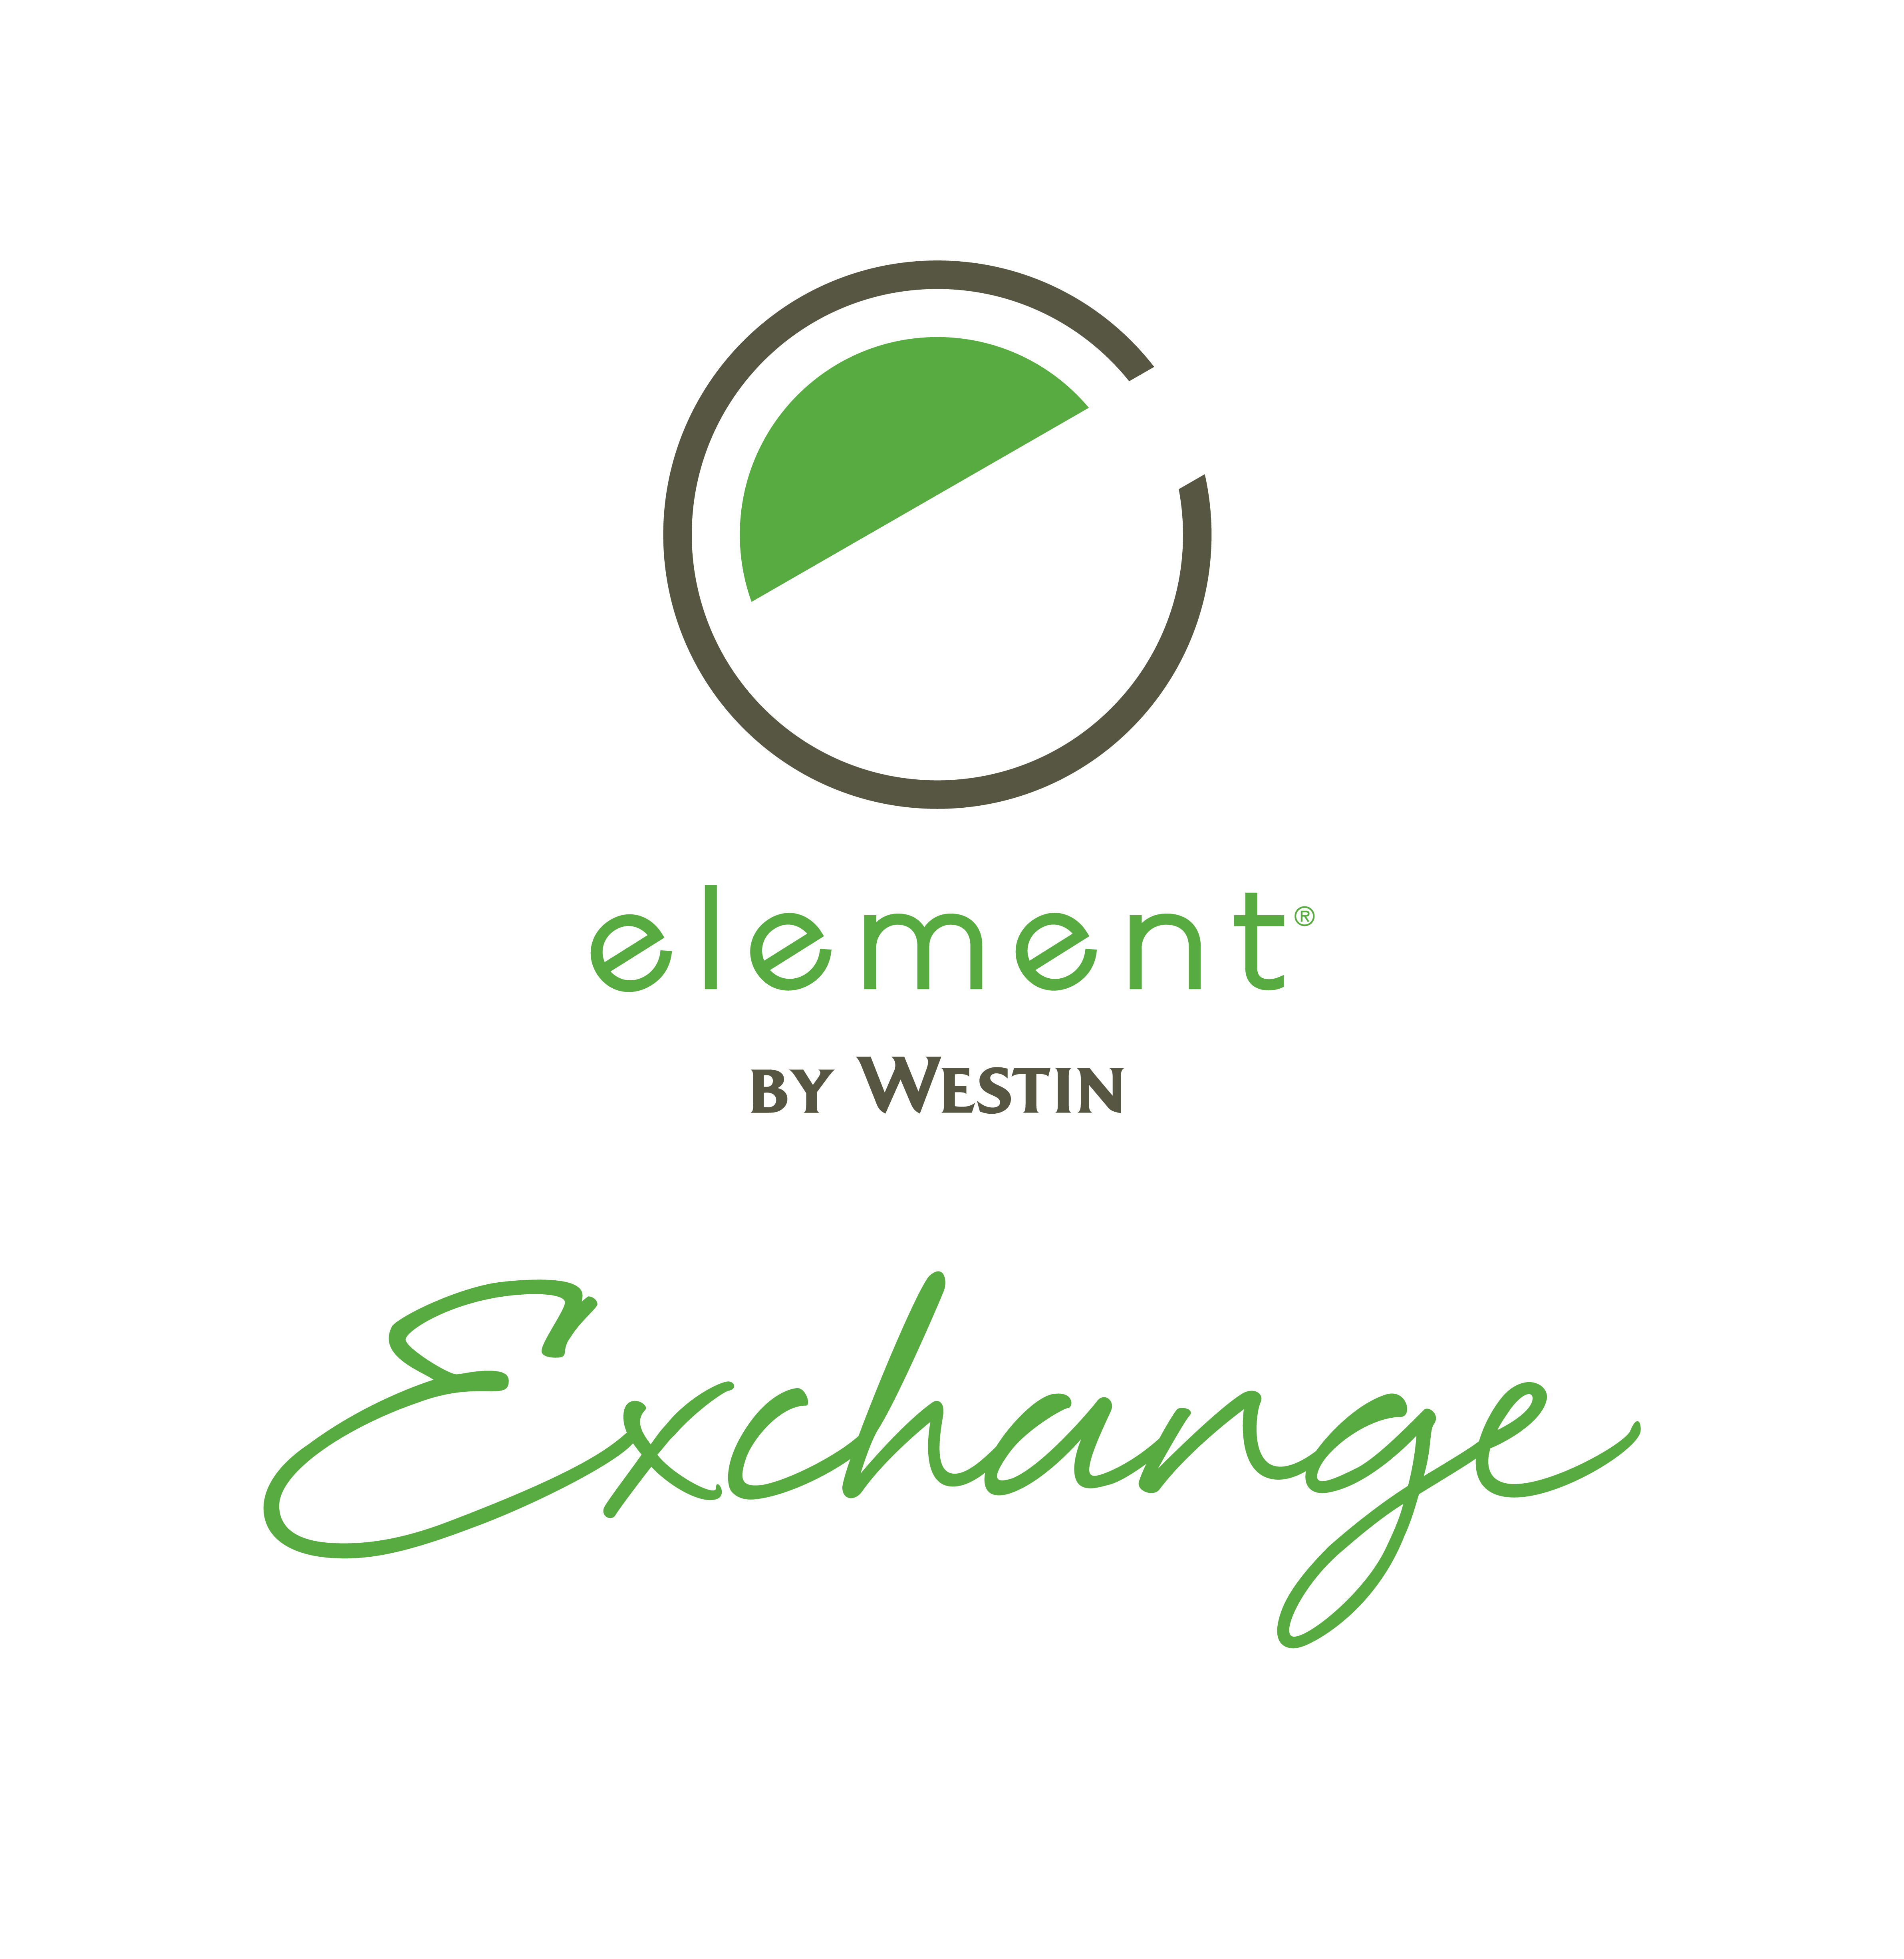 Element by Westin Logo - Element Exchange [08/25/17]